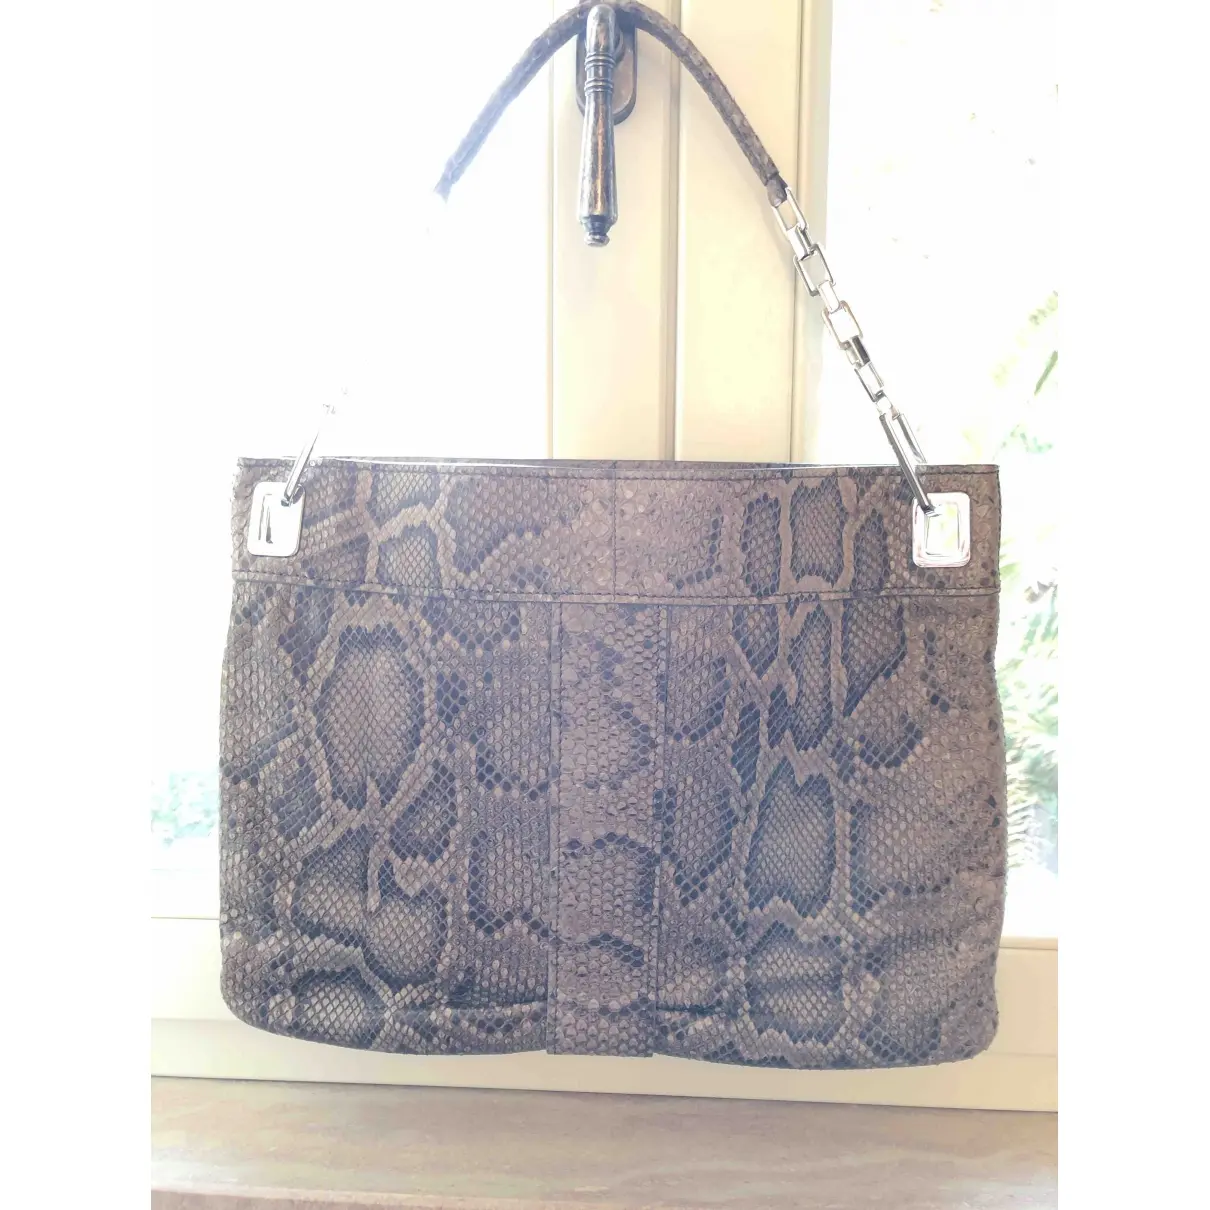 Roger Vivier Python handbag for sale